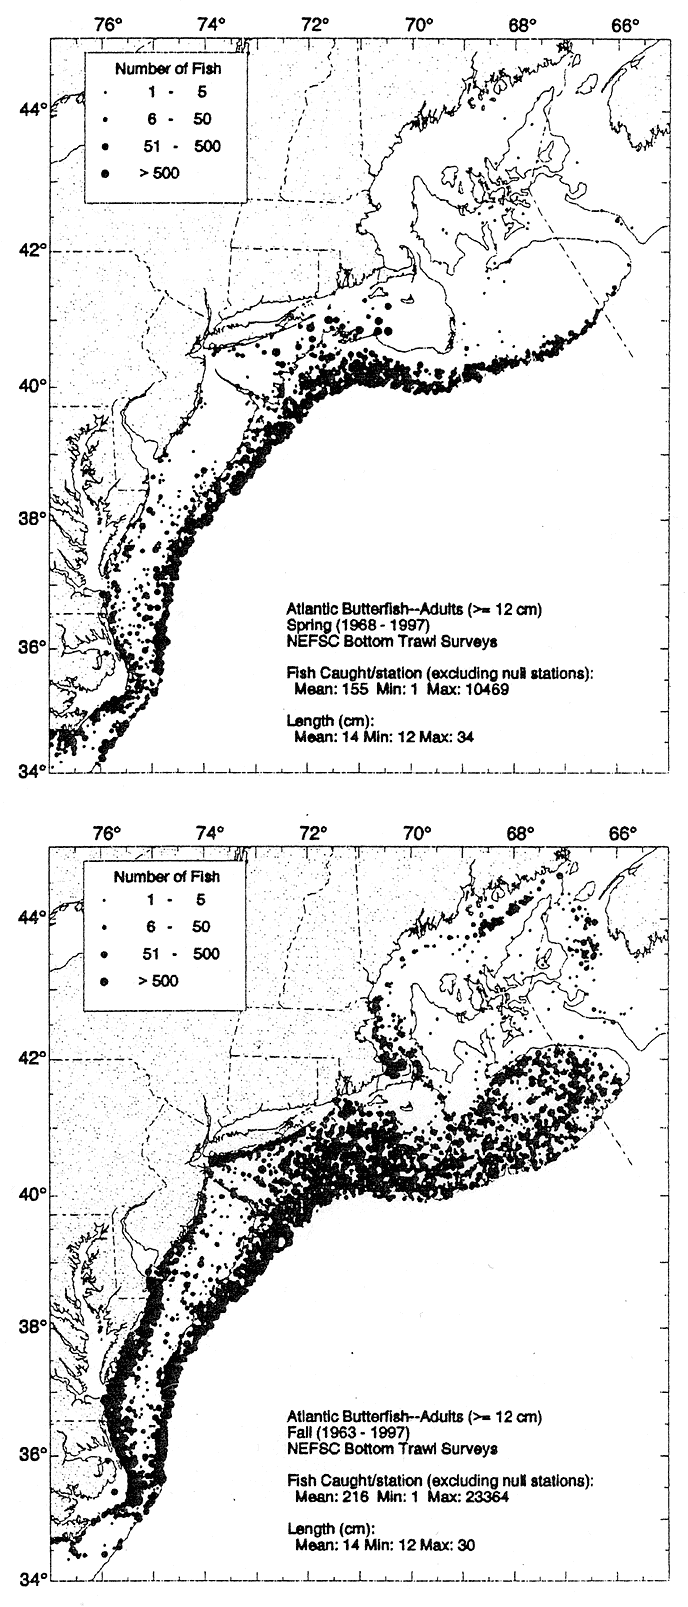 Distribution of Atlantic Butterfish